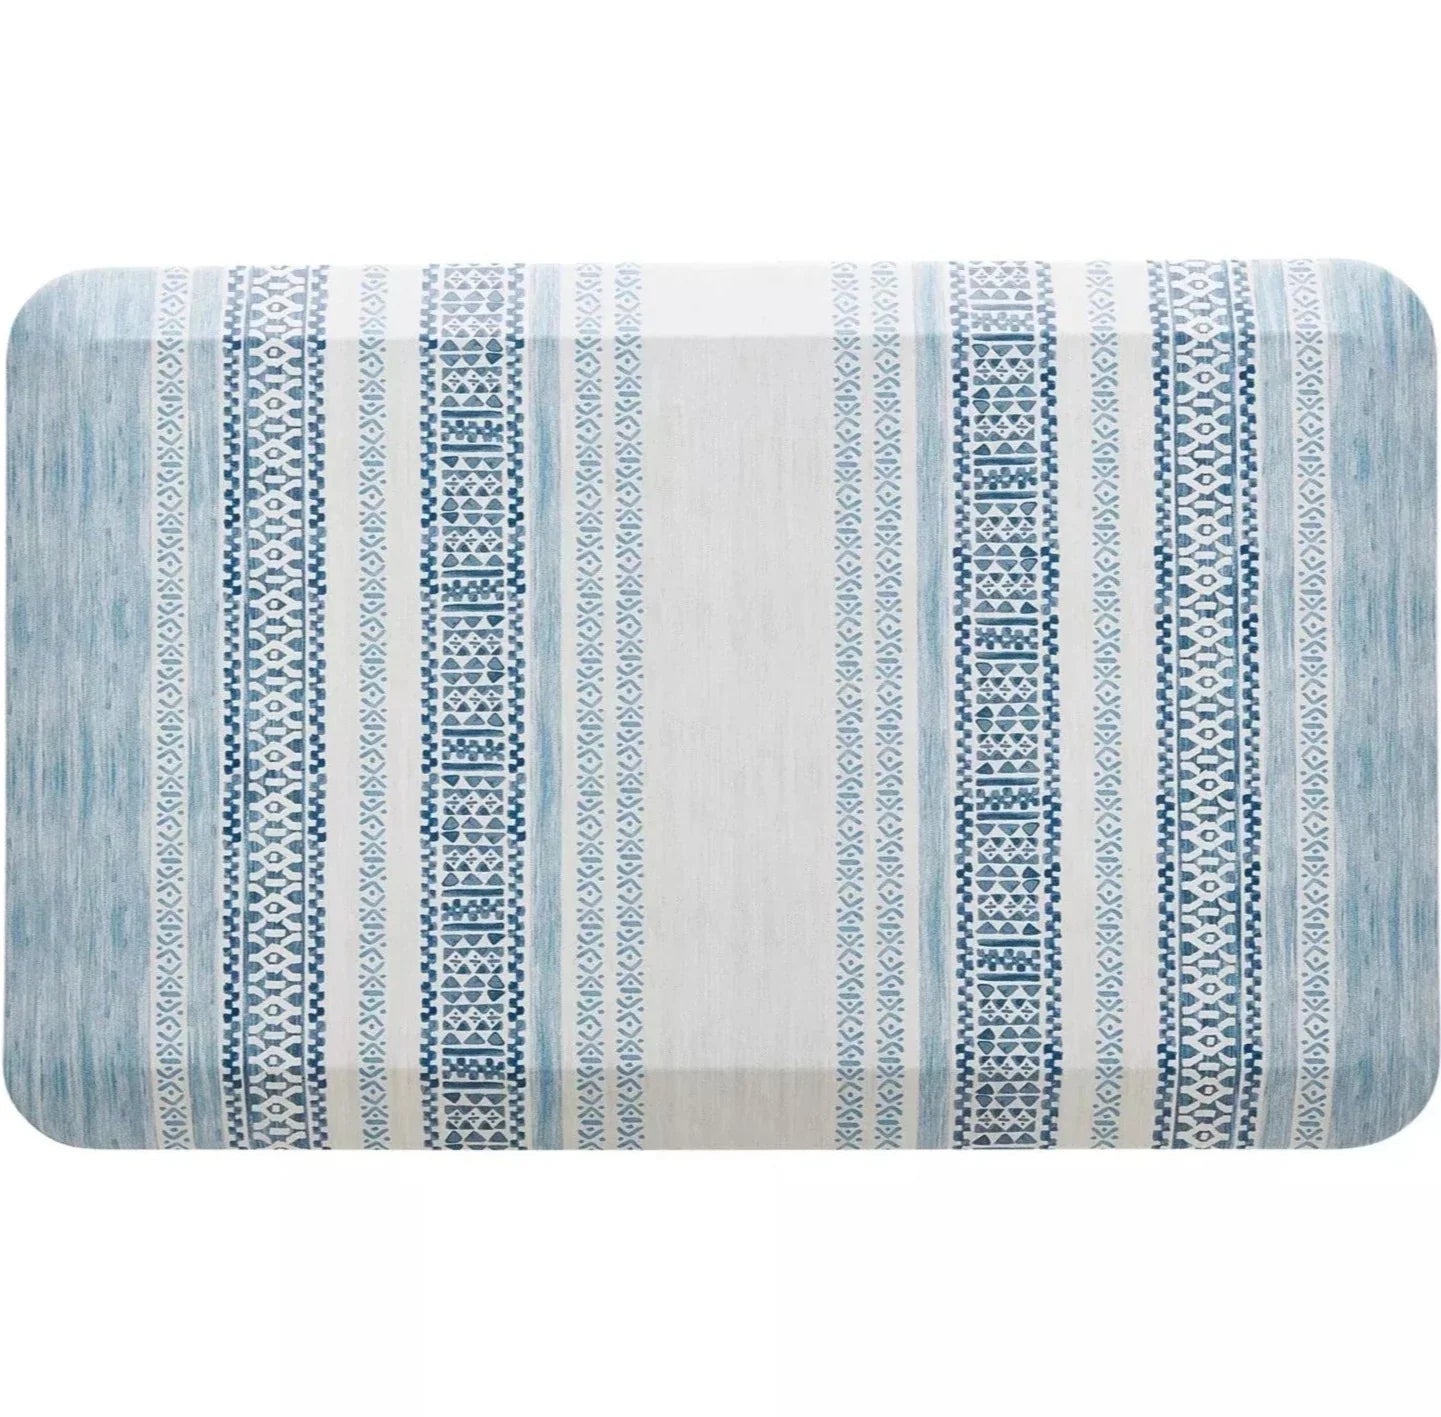 Blue and white boho stripe kitchen mat in size 20x32